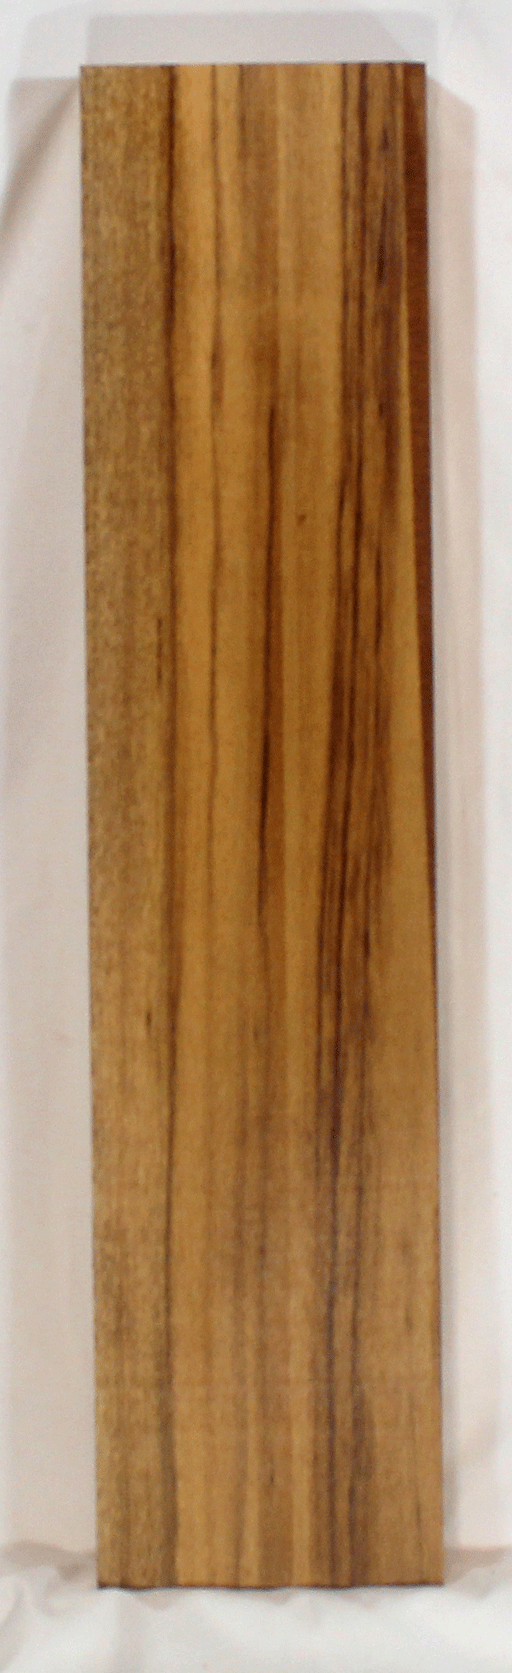 Myrtle Bow Wood Riser